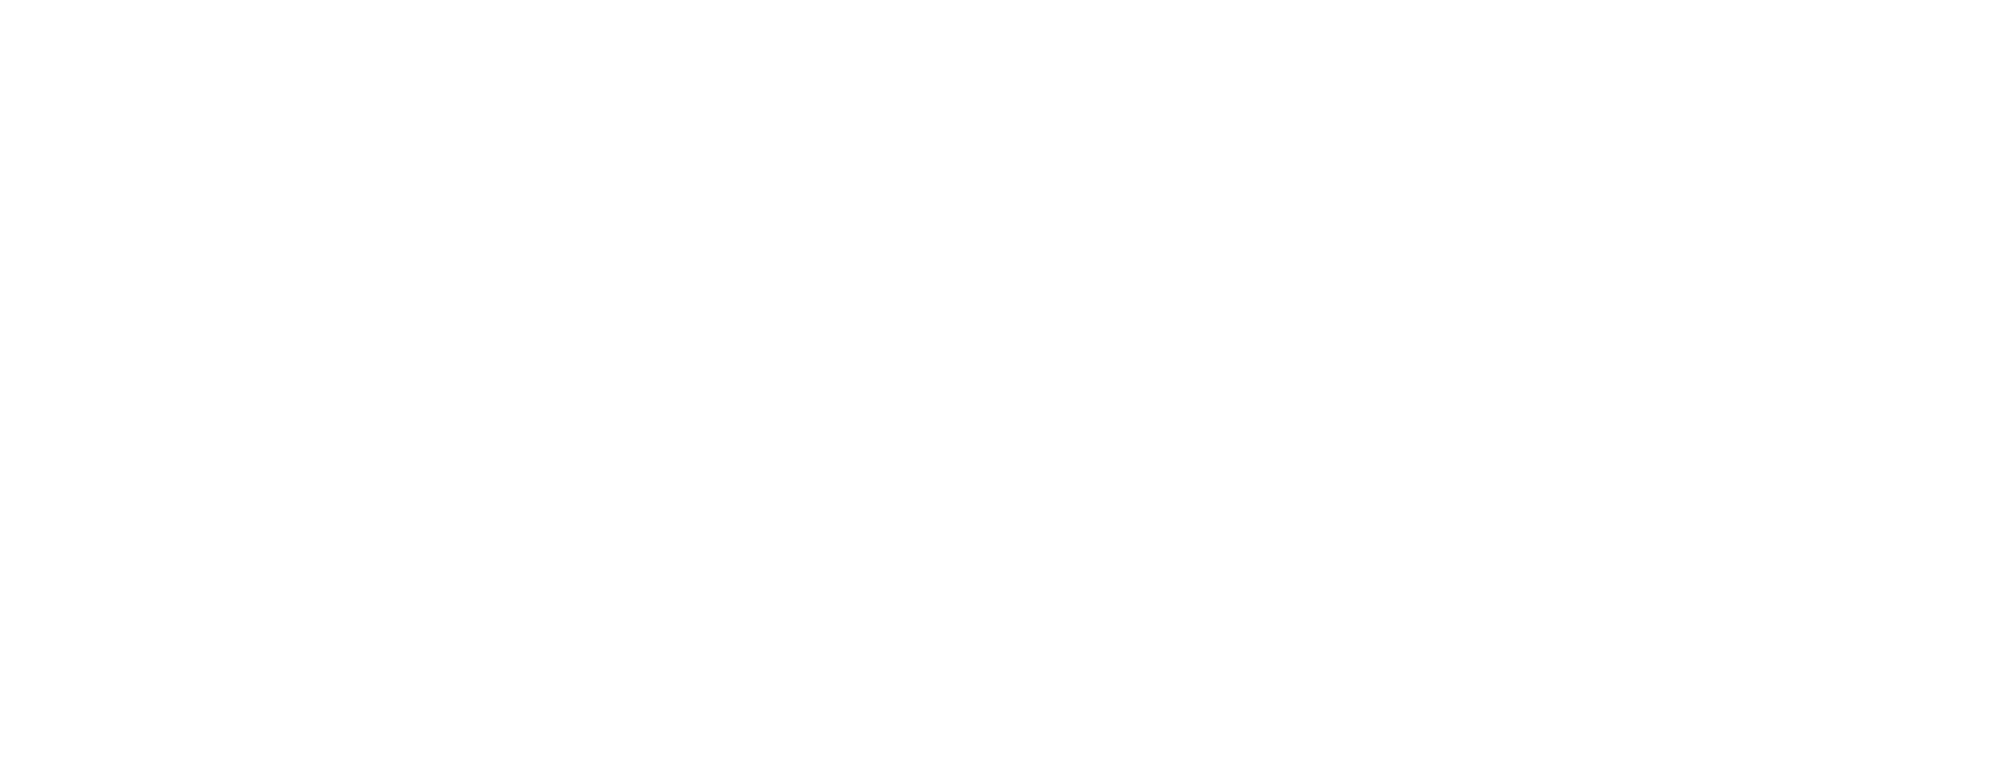 OpenFF Toolkit 0.10.4+0.gac3f5419.dirty documentation logo